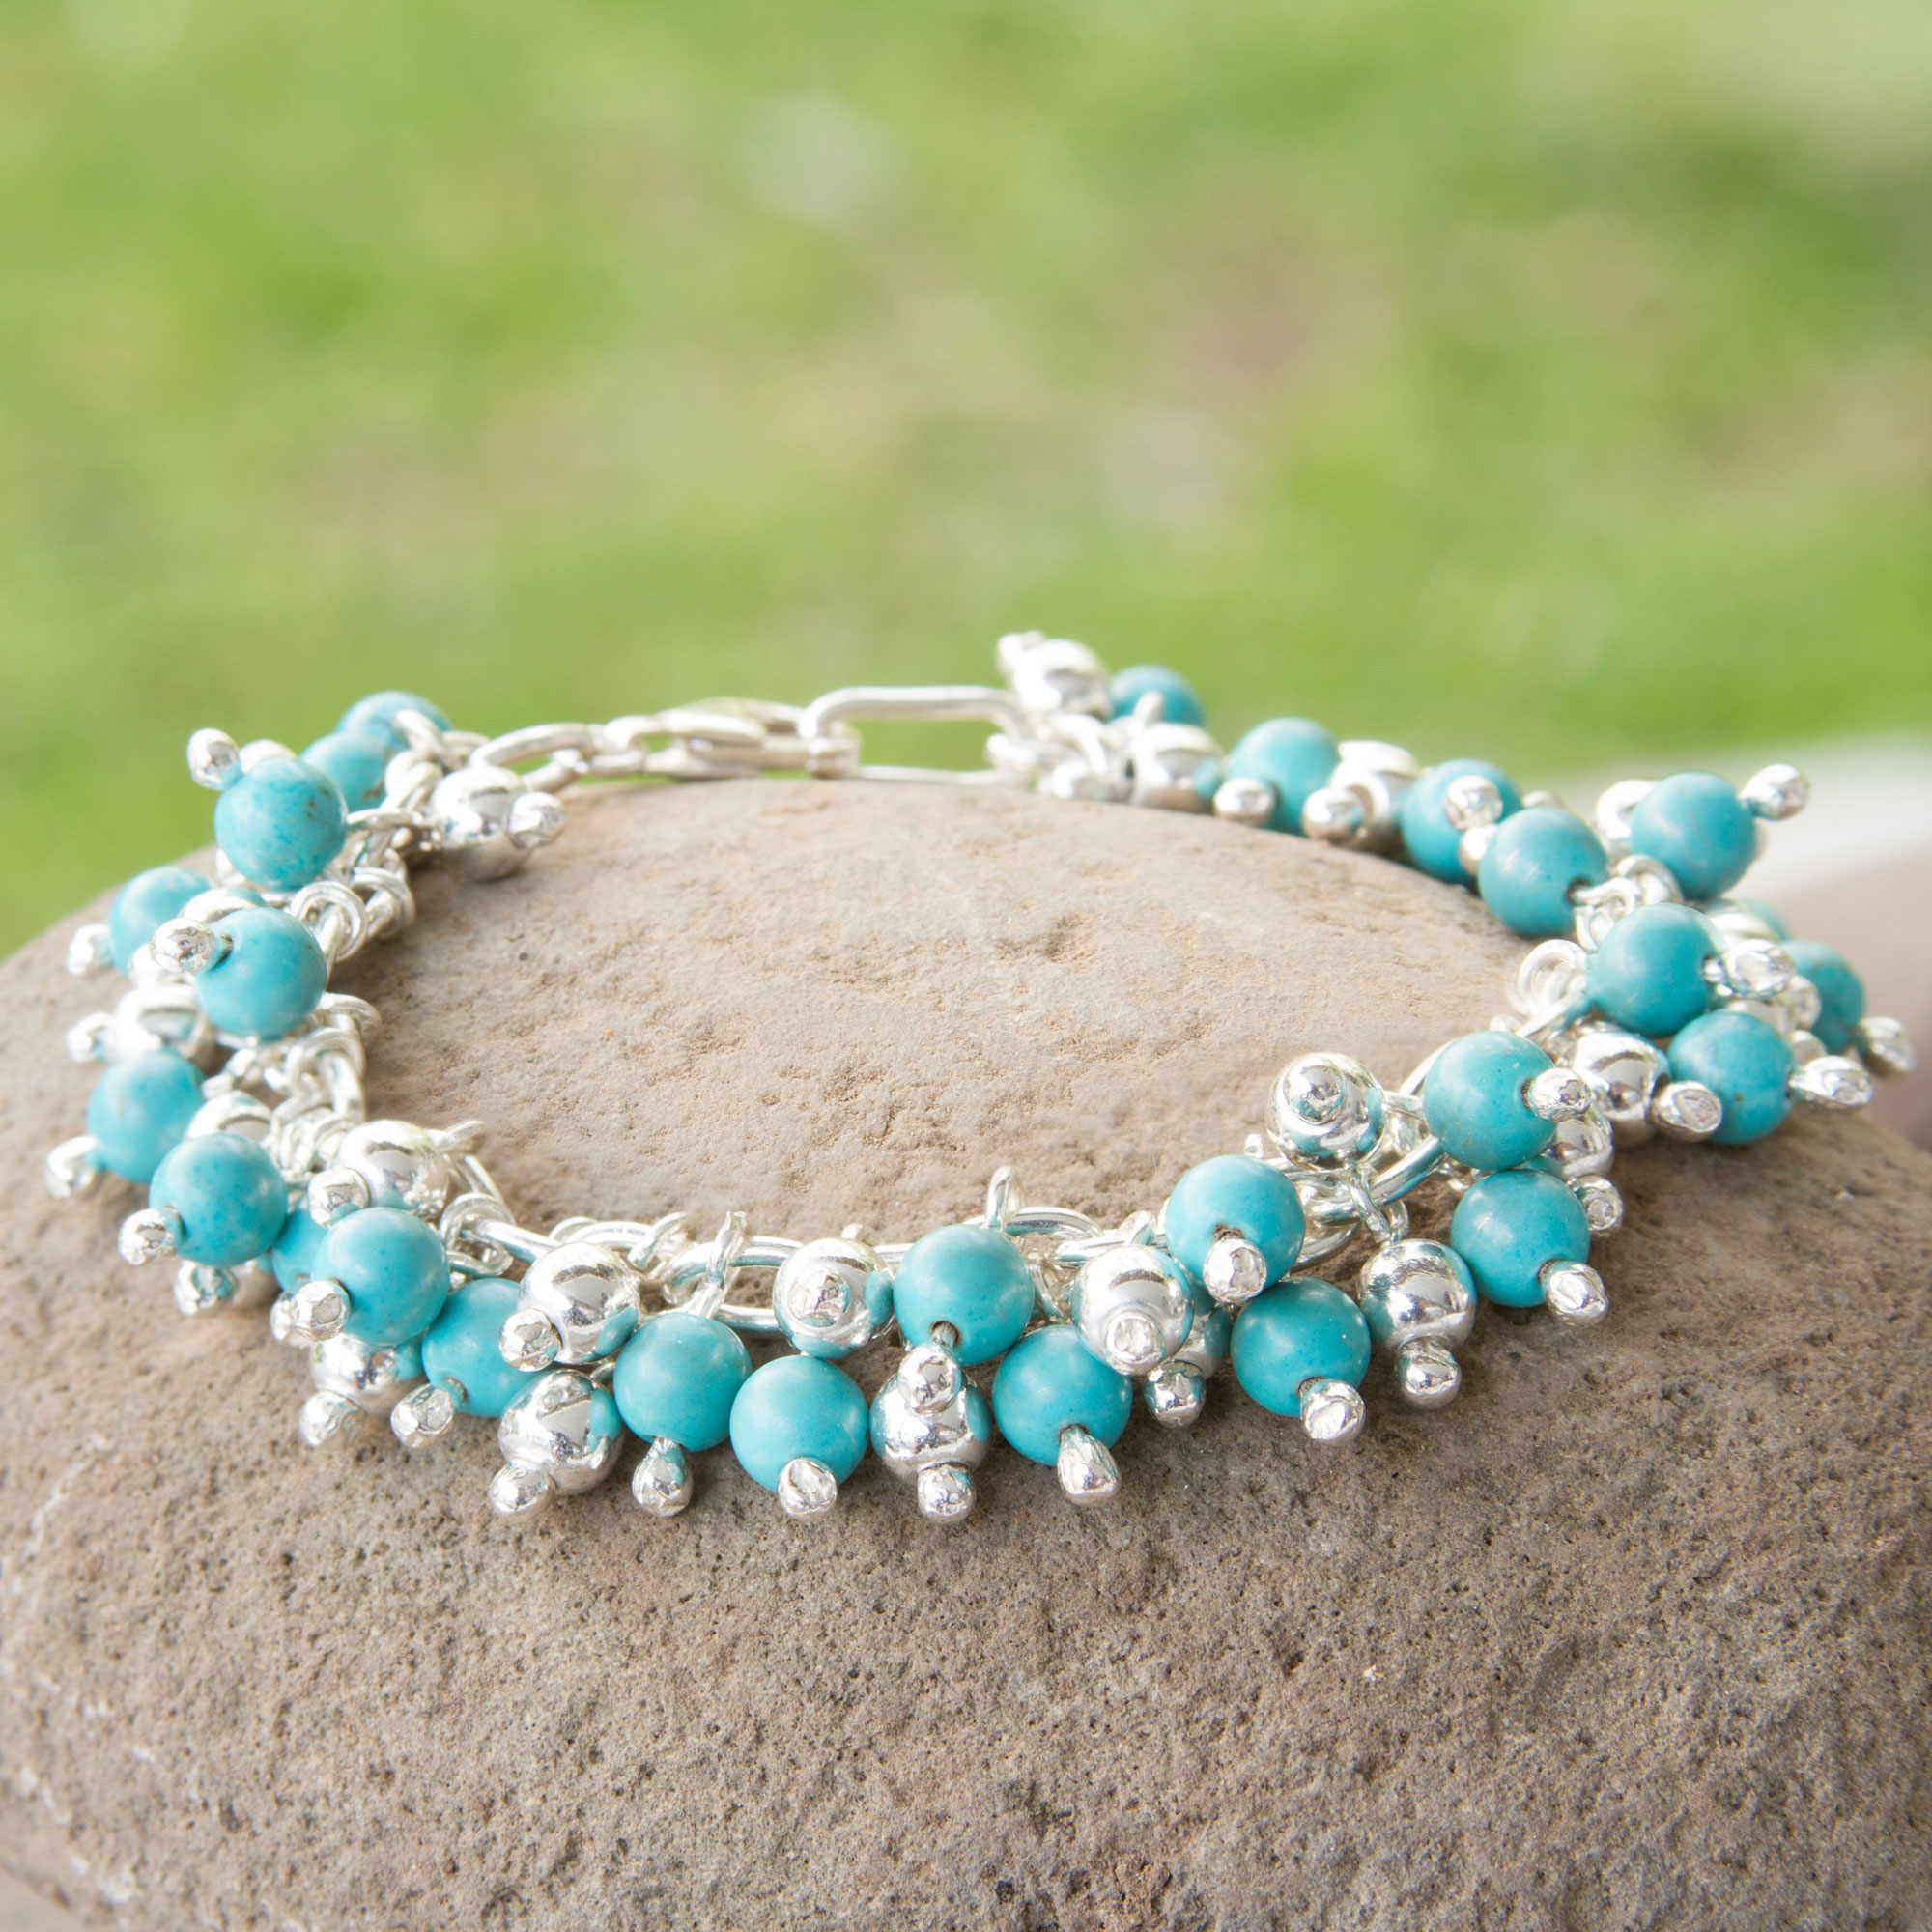 Handmade Turquoise Taxco Sterling Silver Link Bracelet, 'Blue Raindrops'